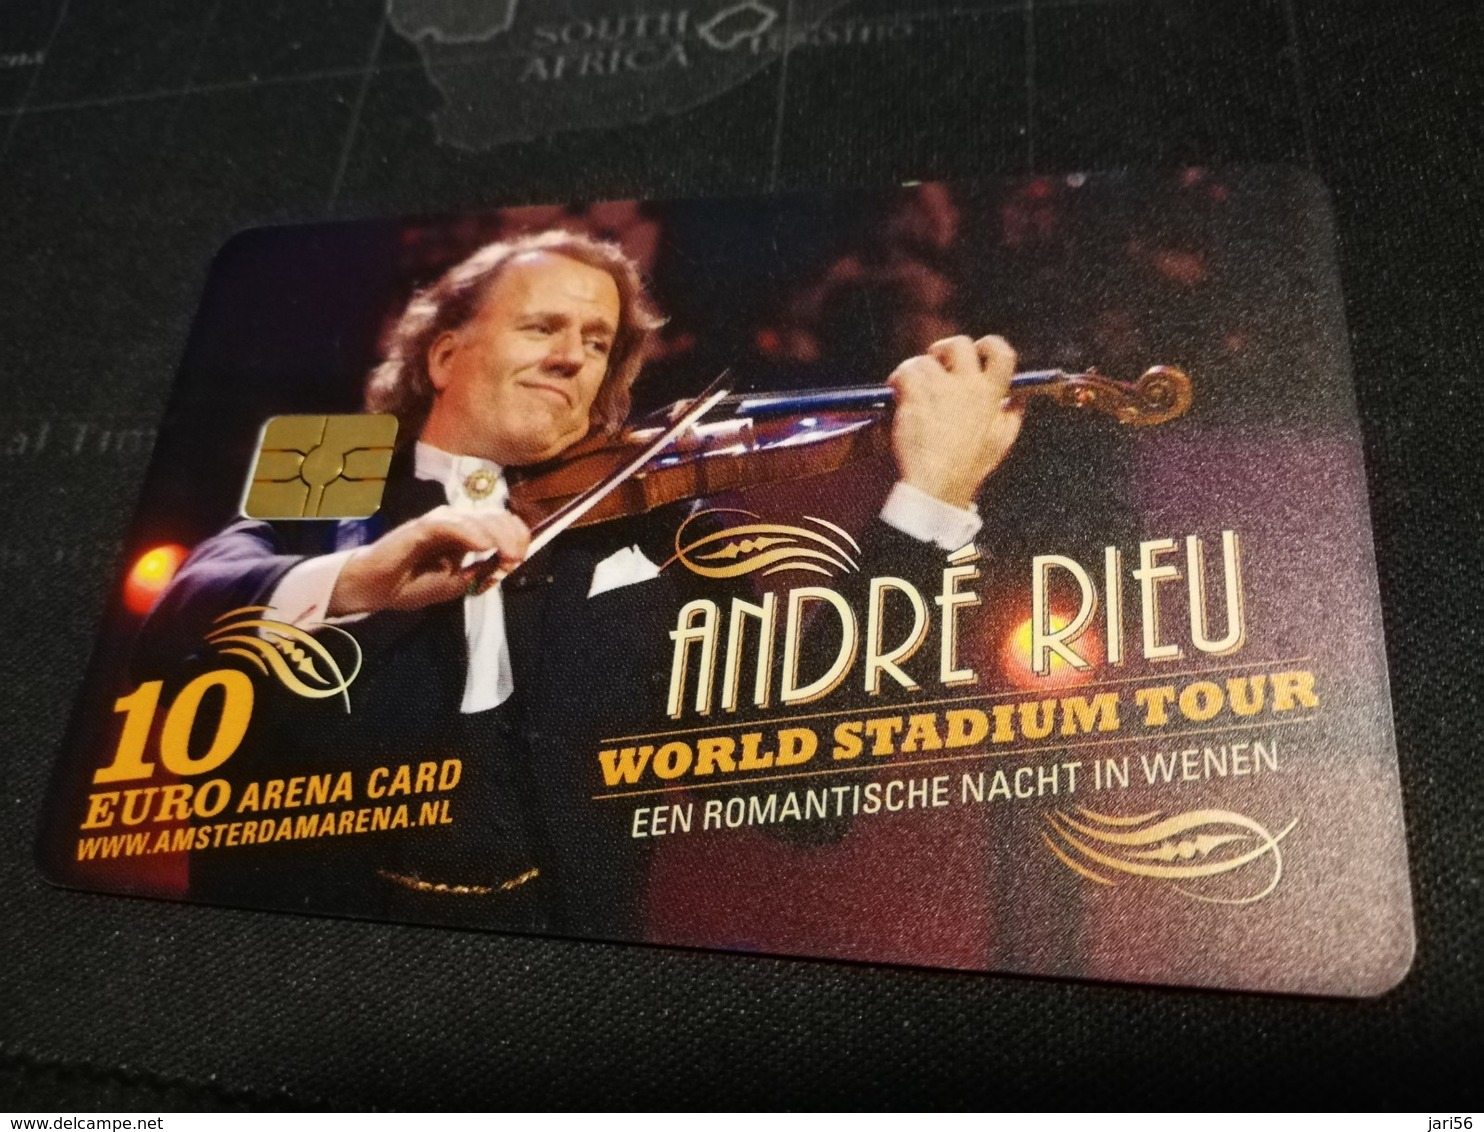 NETHERLANDS  ARENA CARD  ANDRE RIEU WORLD TOUR WENEN    €10,- USED CARD  ** 1424** - Públicas